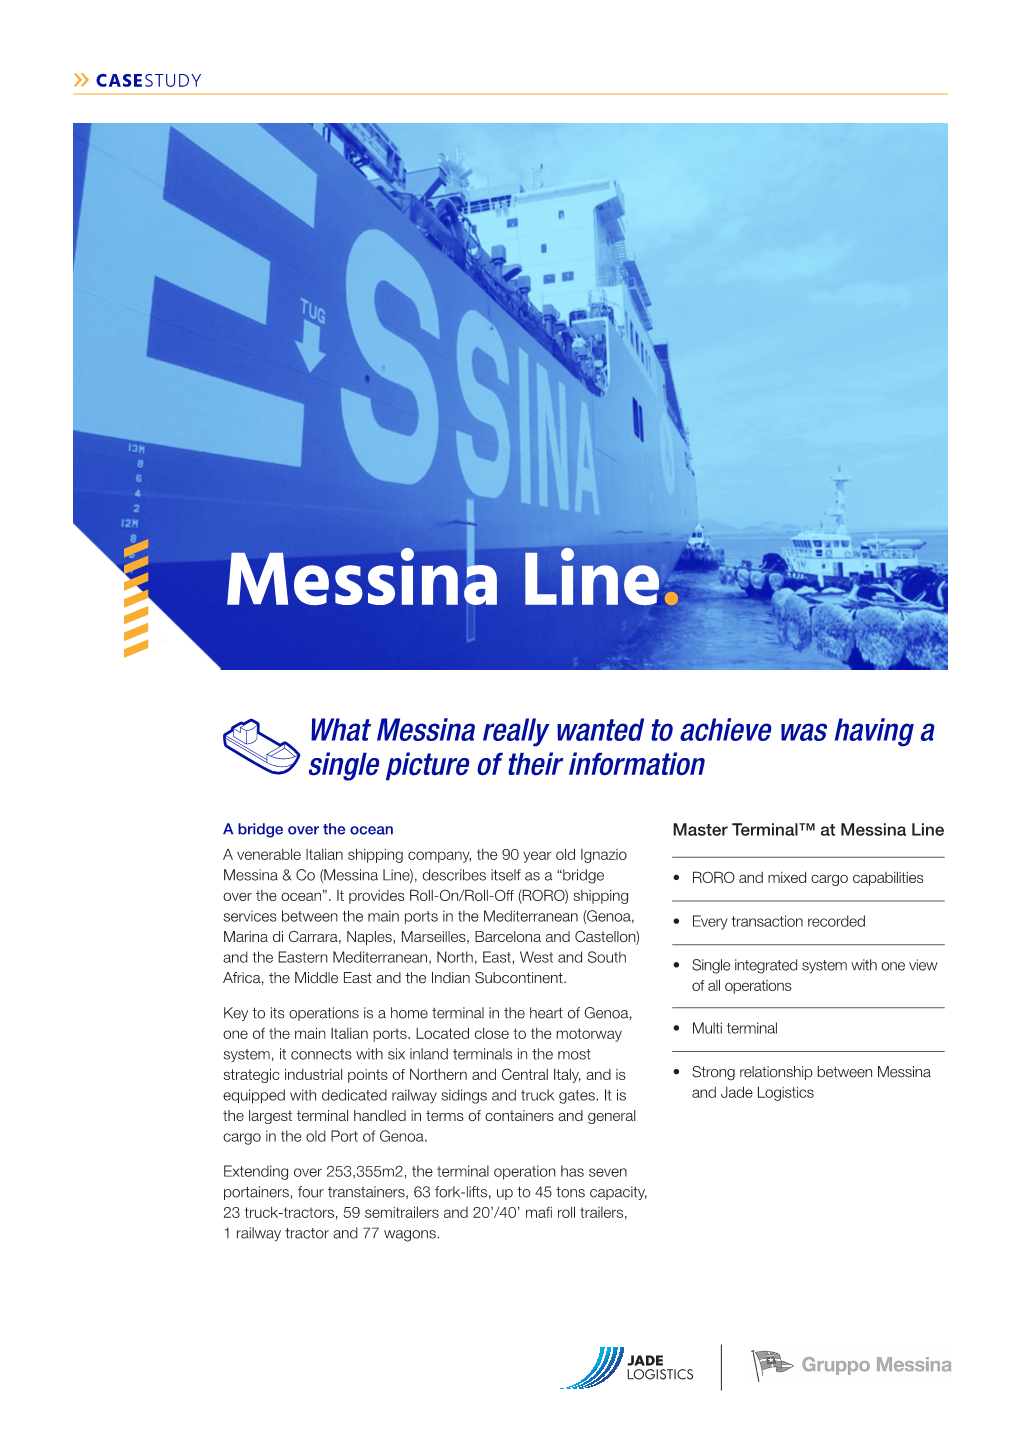 View Messina Line Case Study